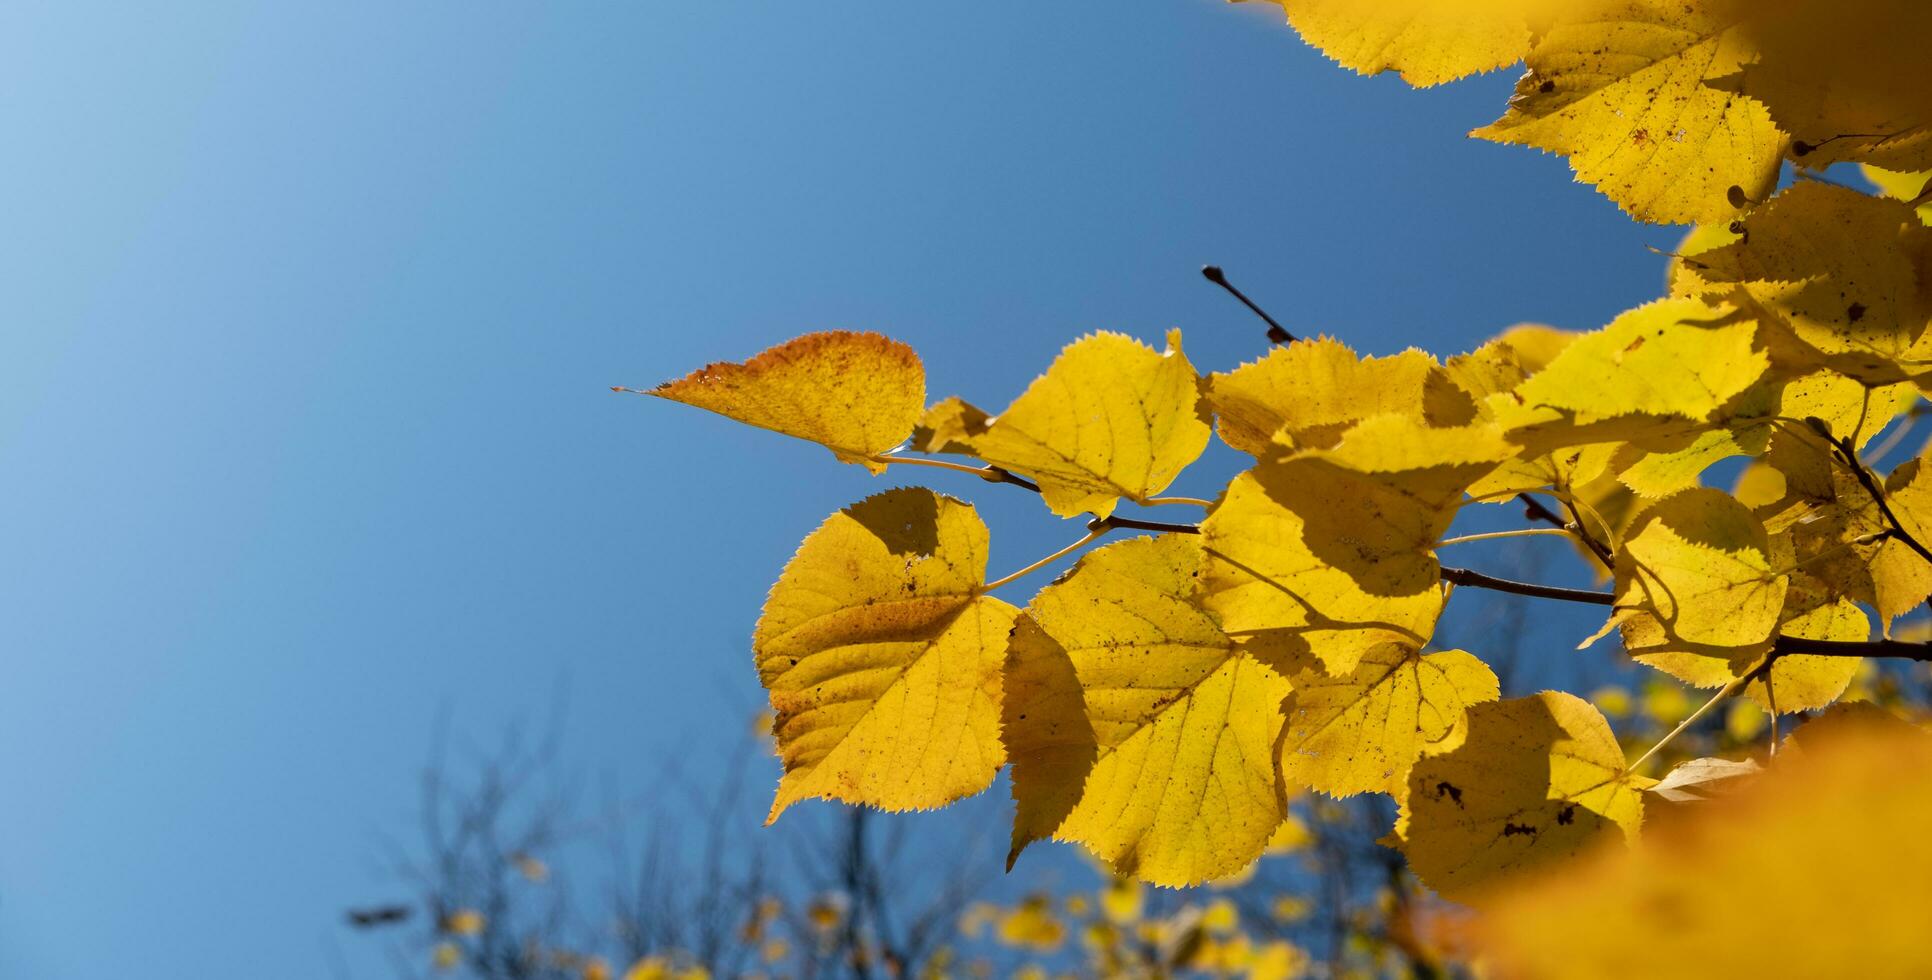 Orange yellow autumn leaves on sky background. Fall season, october, november time photo